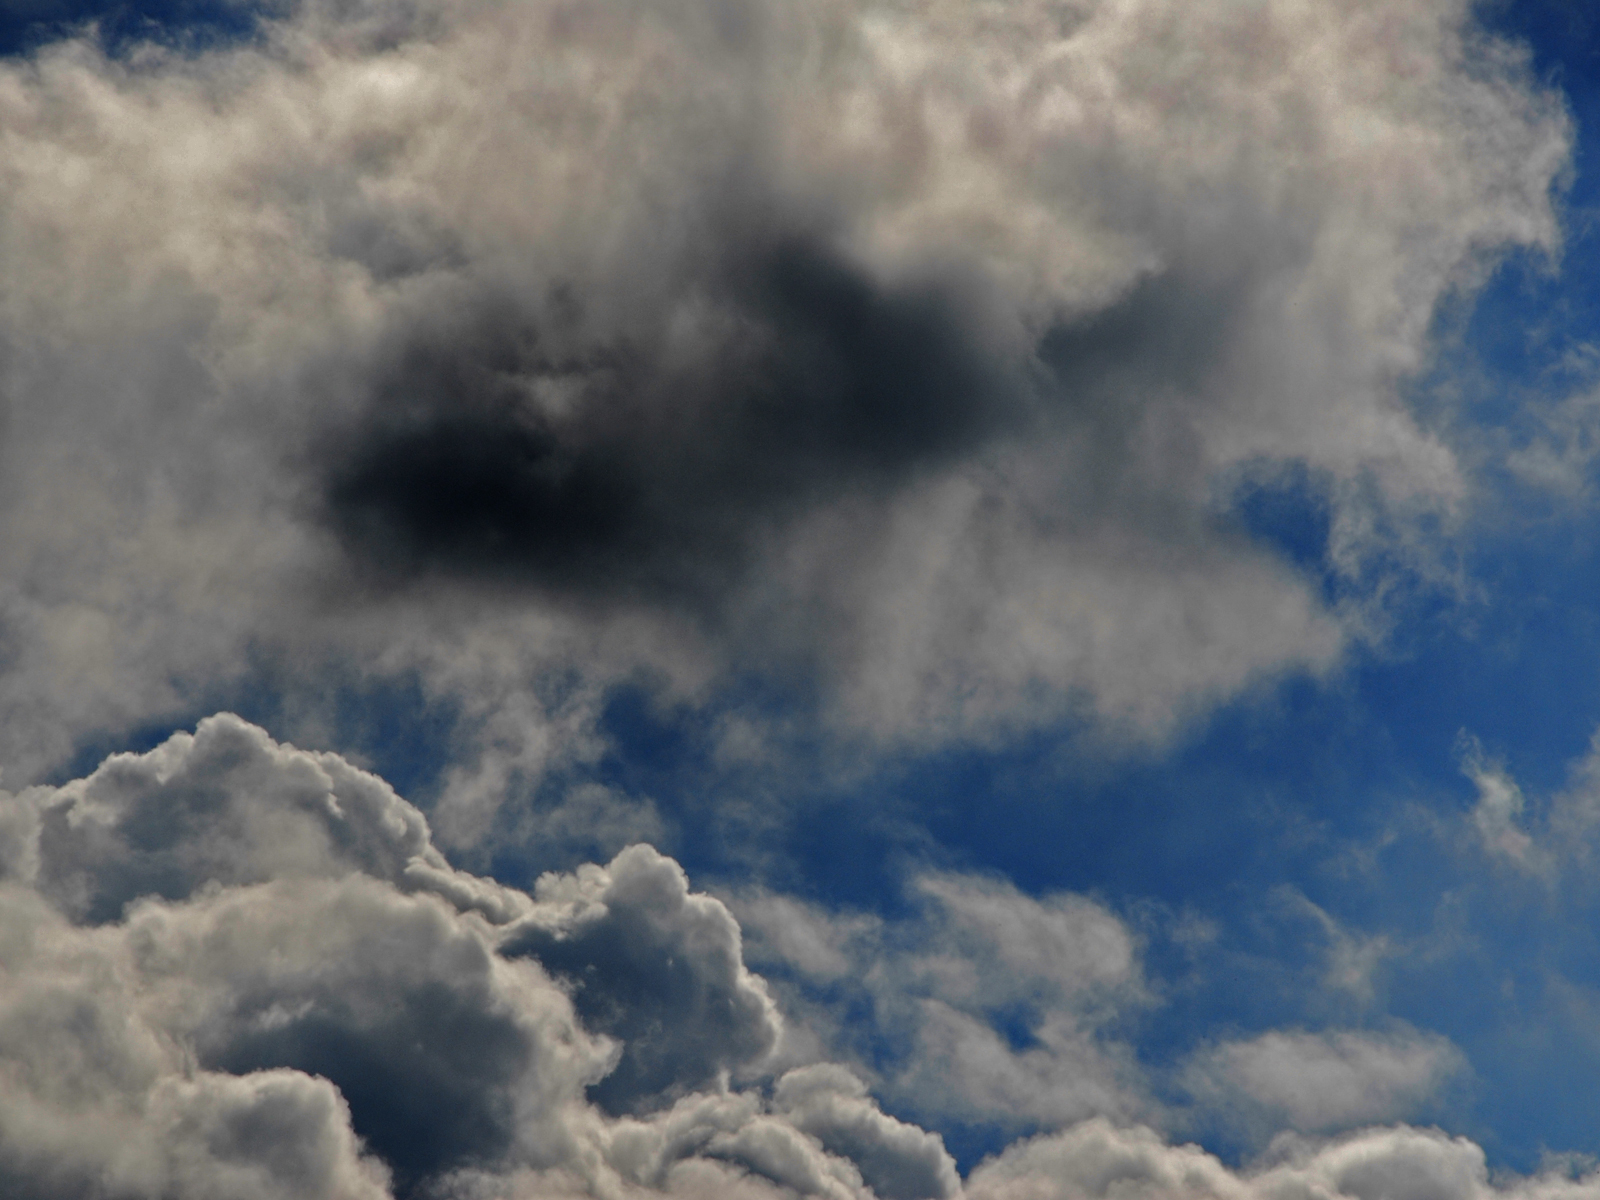 Rain cloud series (image 13 of 15) photo